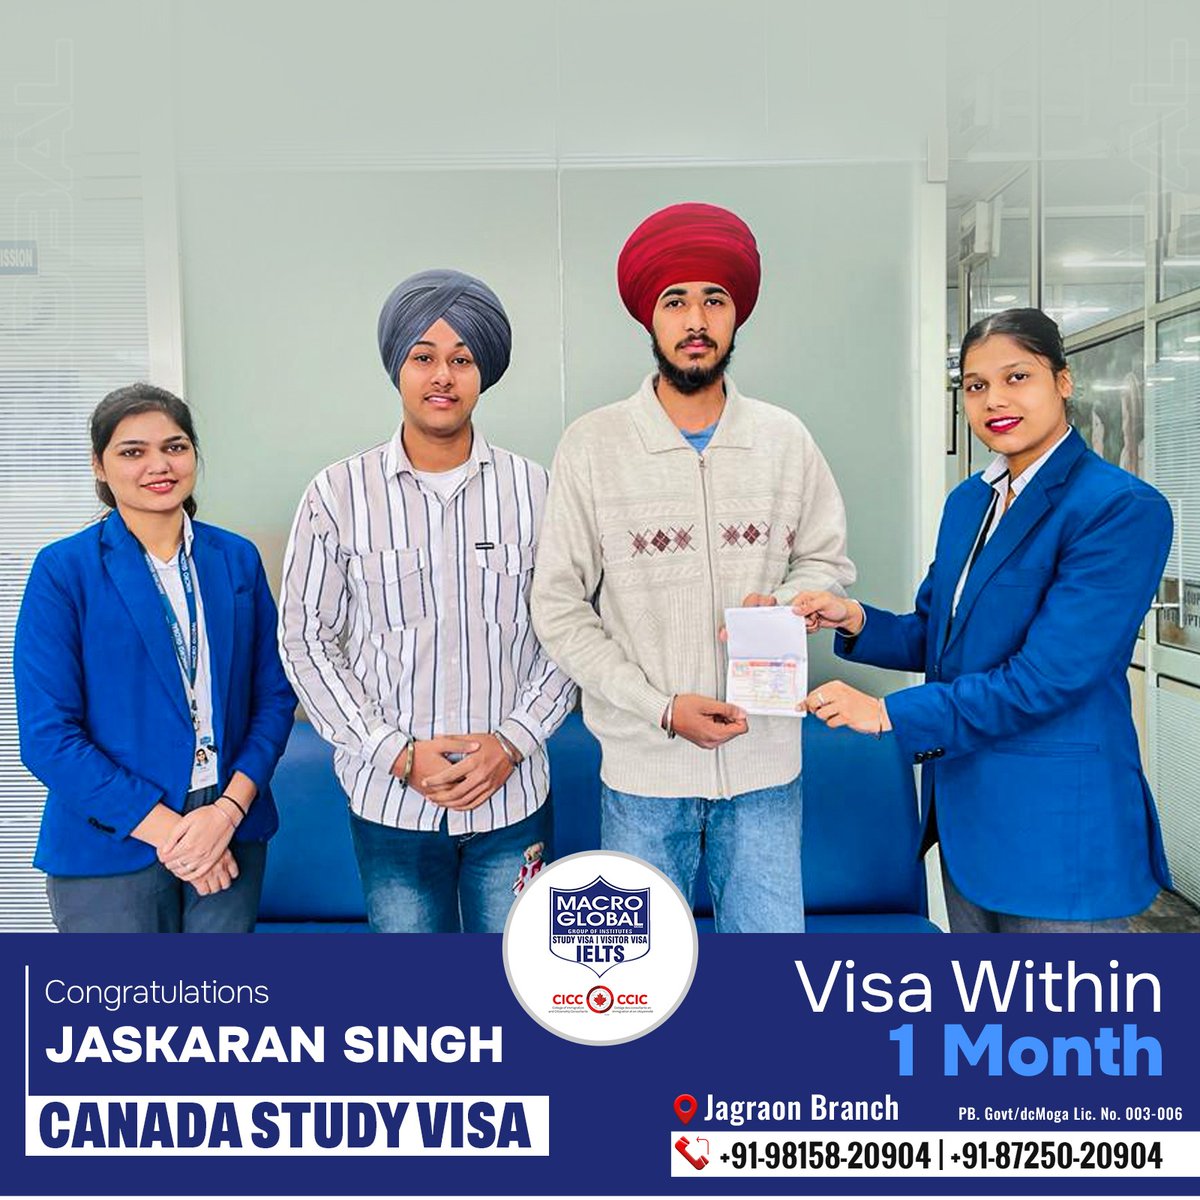 Huge congratulations to Jaskaran Singh on securing his Canada Study Visa in just a month! 
#MacroGlobal #GurmilapSinghDalla #Canada #Canadastudyvisa #canadaopenworkpermit #spousevisa #Visitorvisa #Visa #IELTS #IELTSTraining #EnrollNow #Immigration